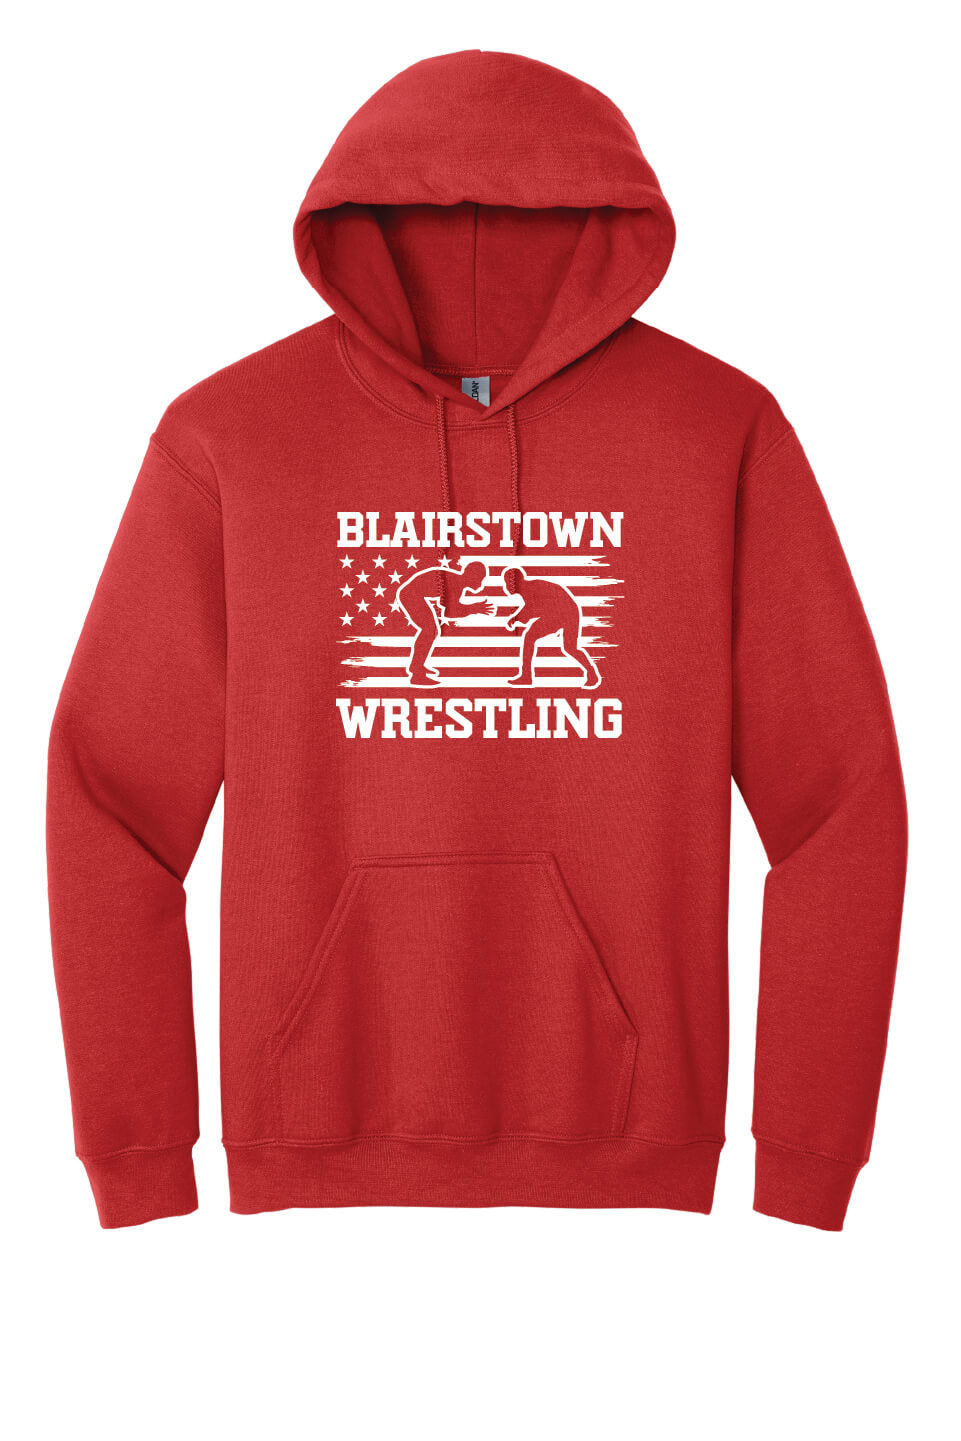 Blairstown Wrestling Flag Hoodie (Youth) red